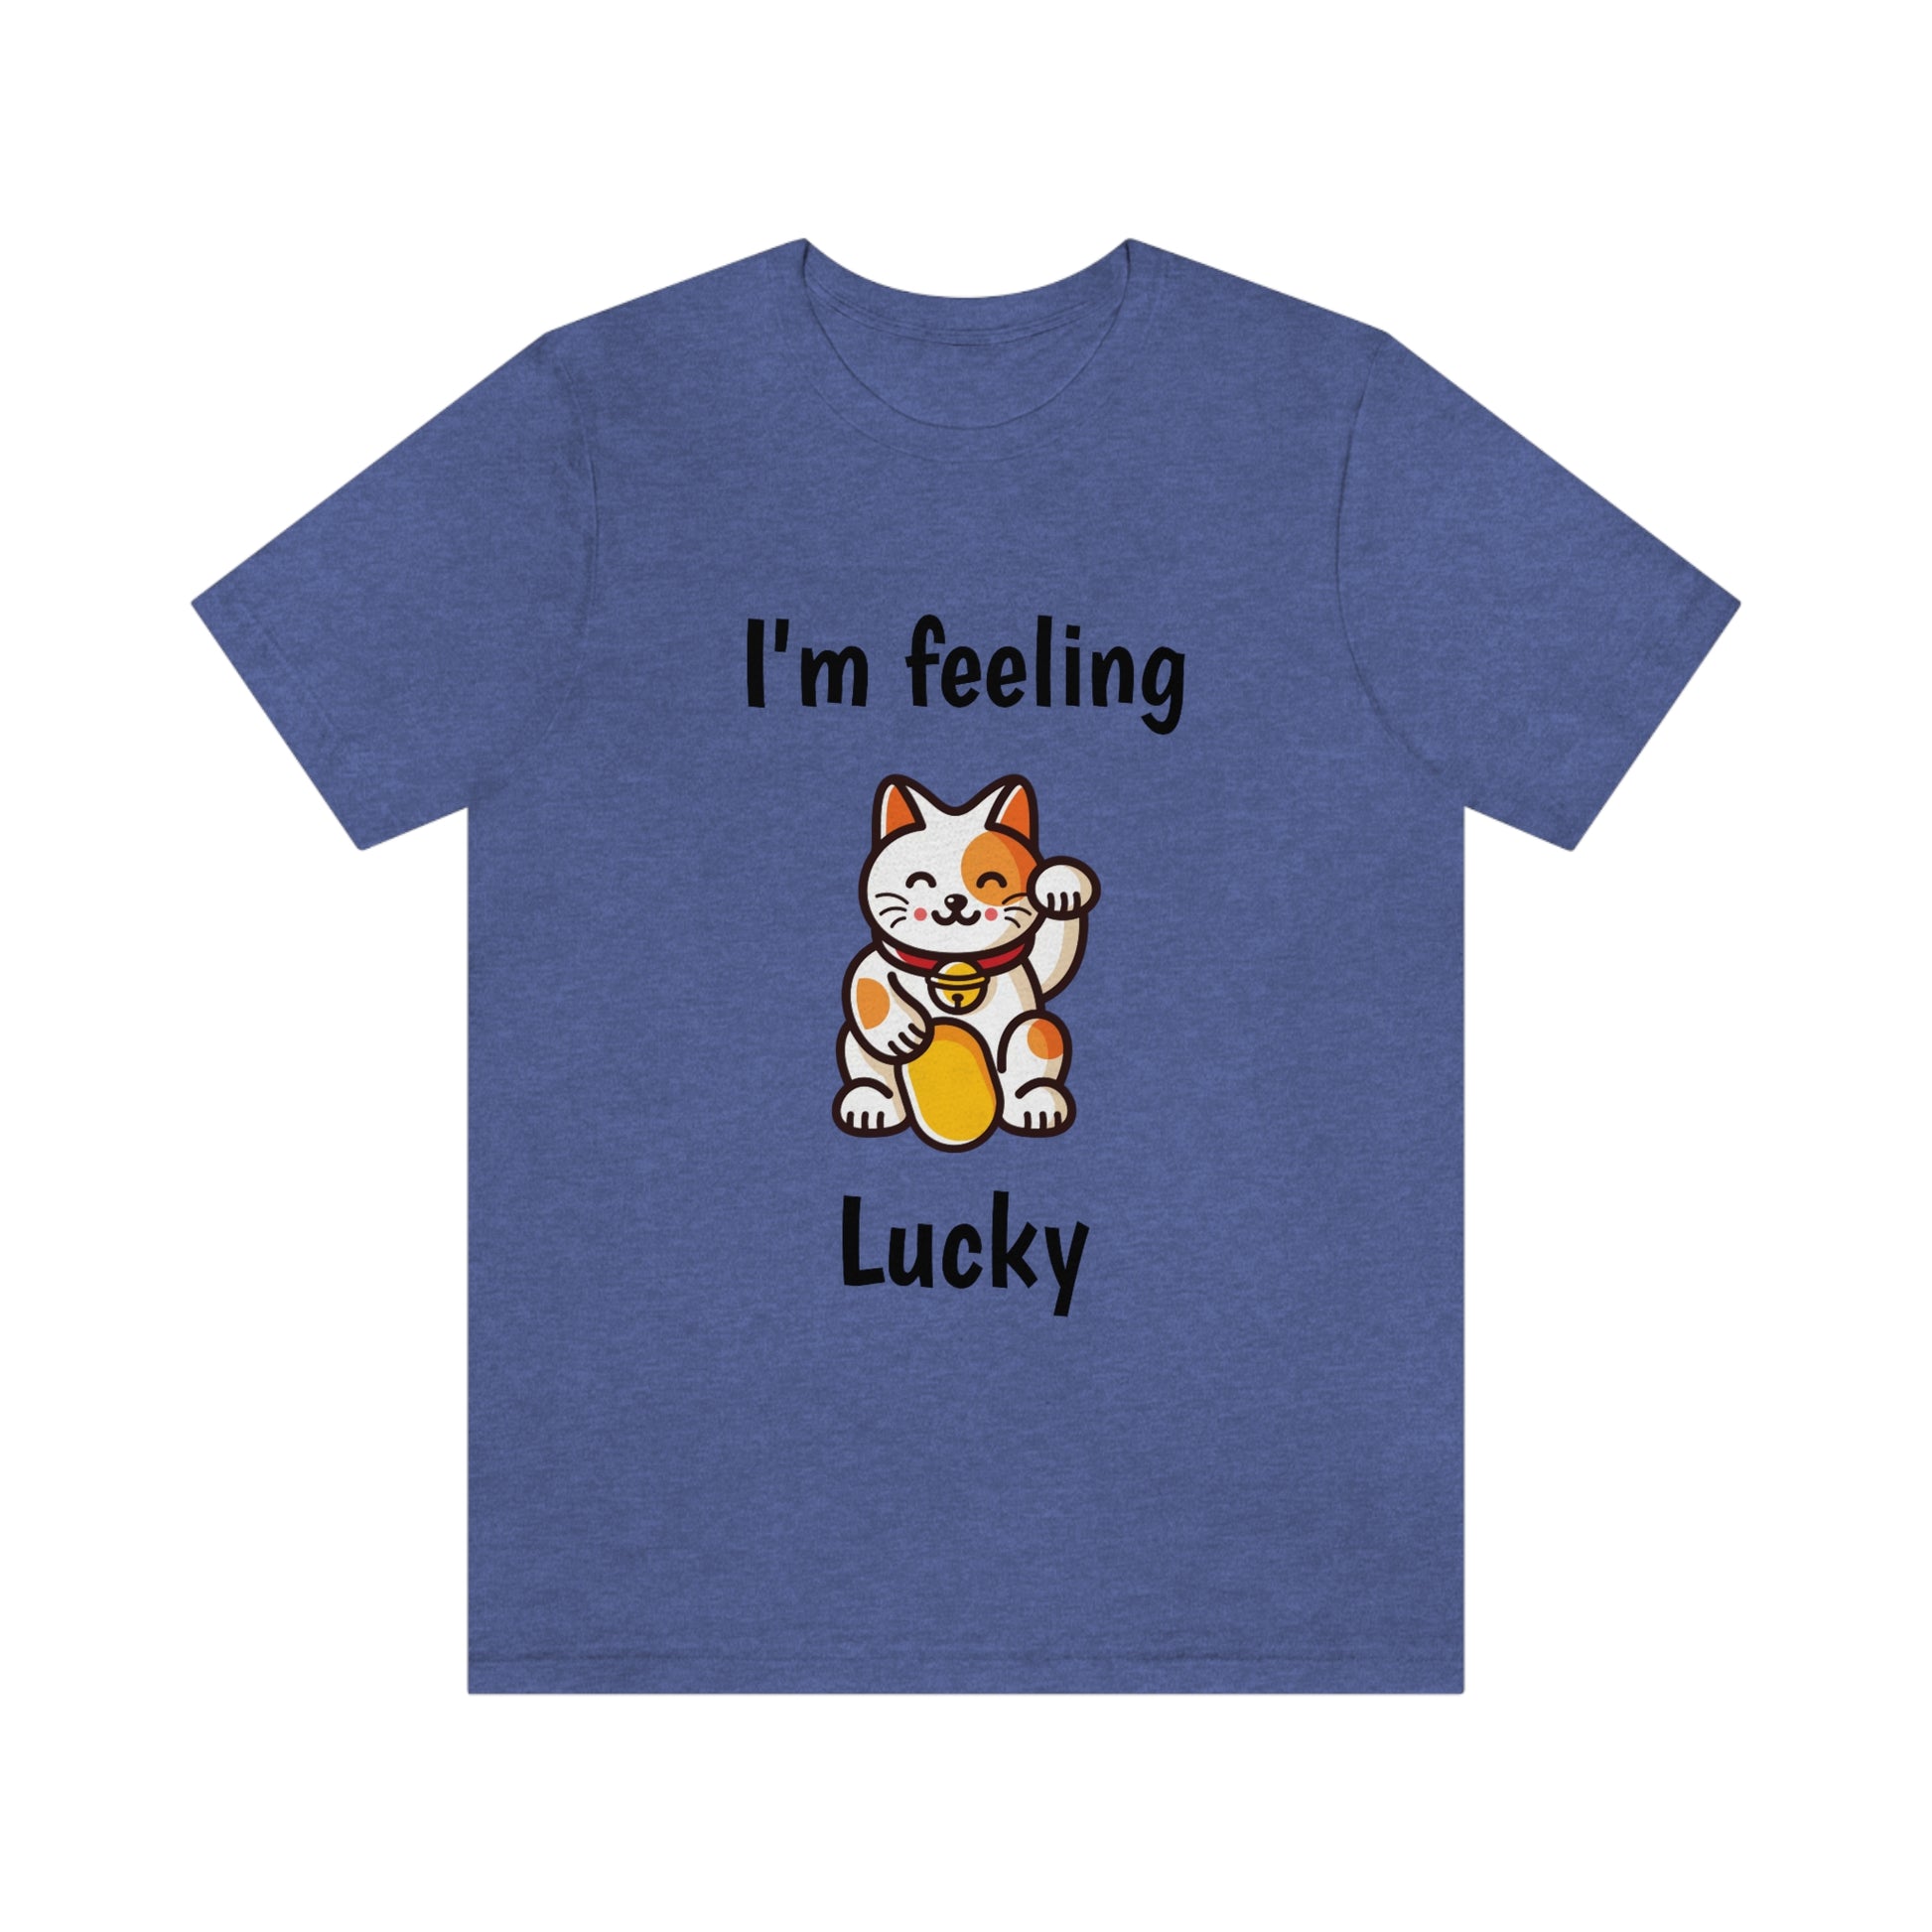 I'm feeling lucky - Fun cat designed - Unisex Short Sleeve Tee.